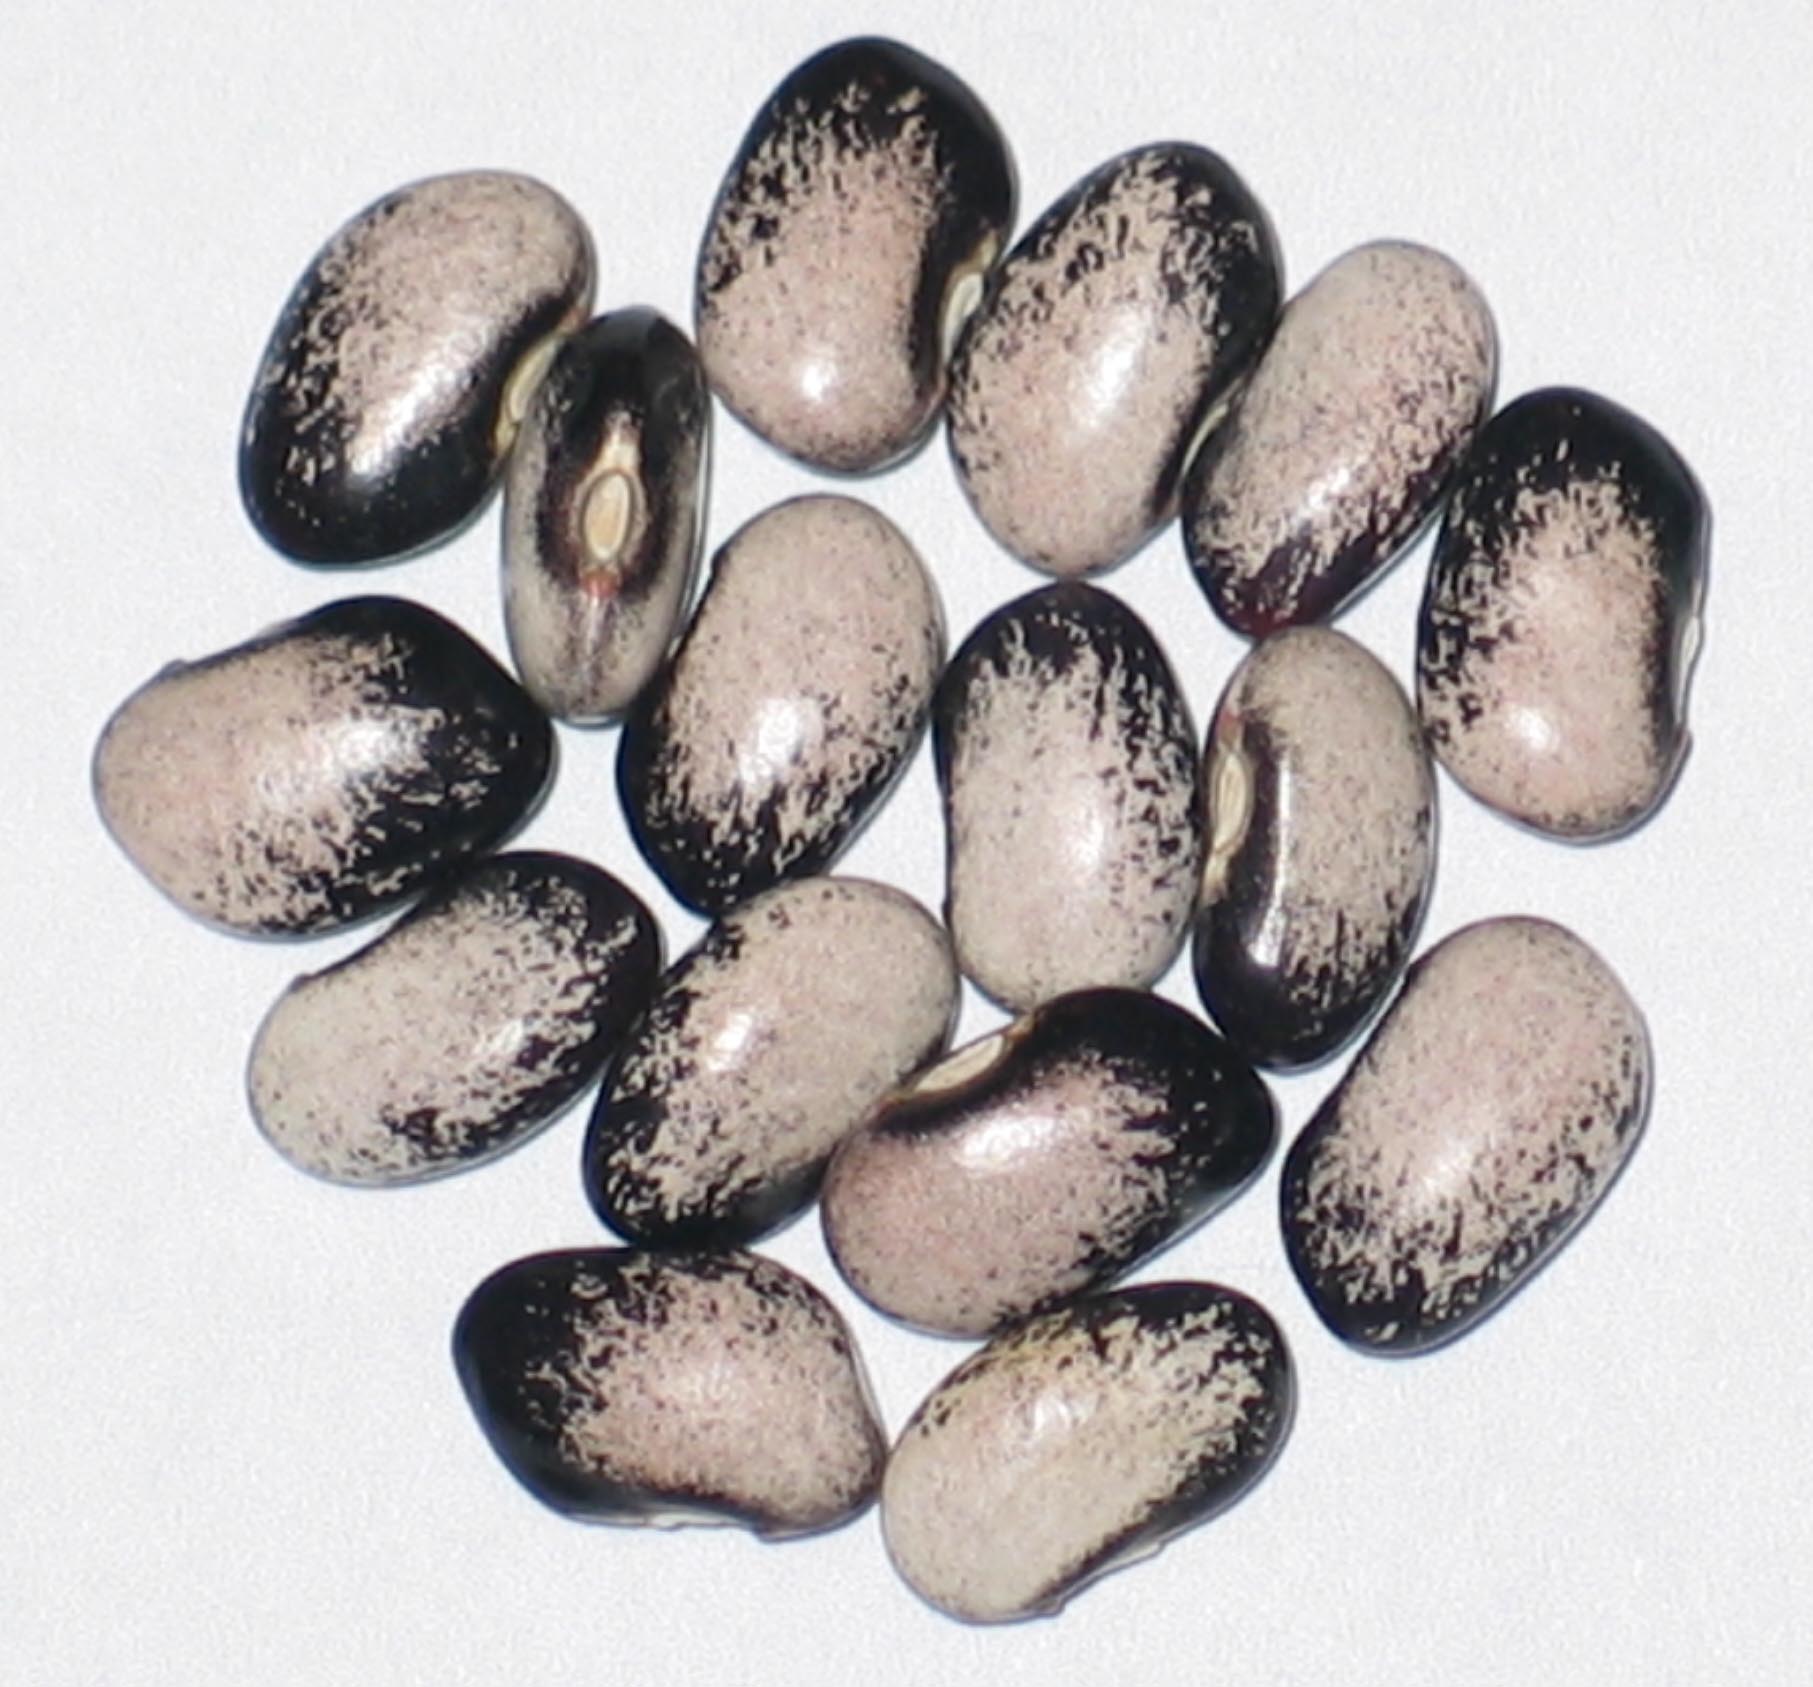 image of Black Nightfall beans